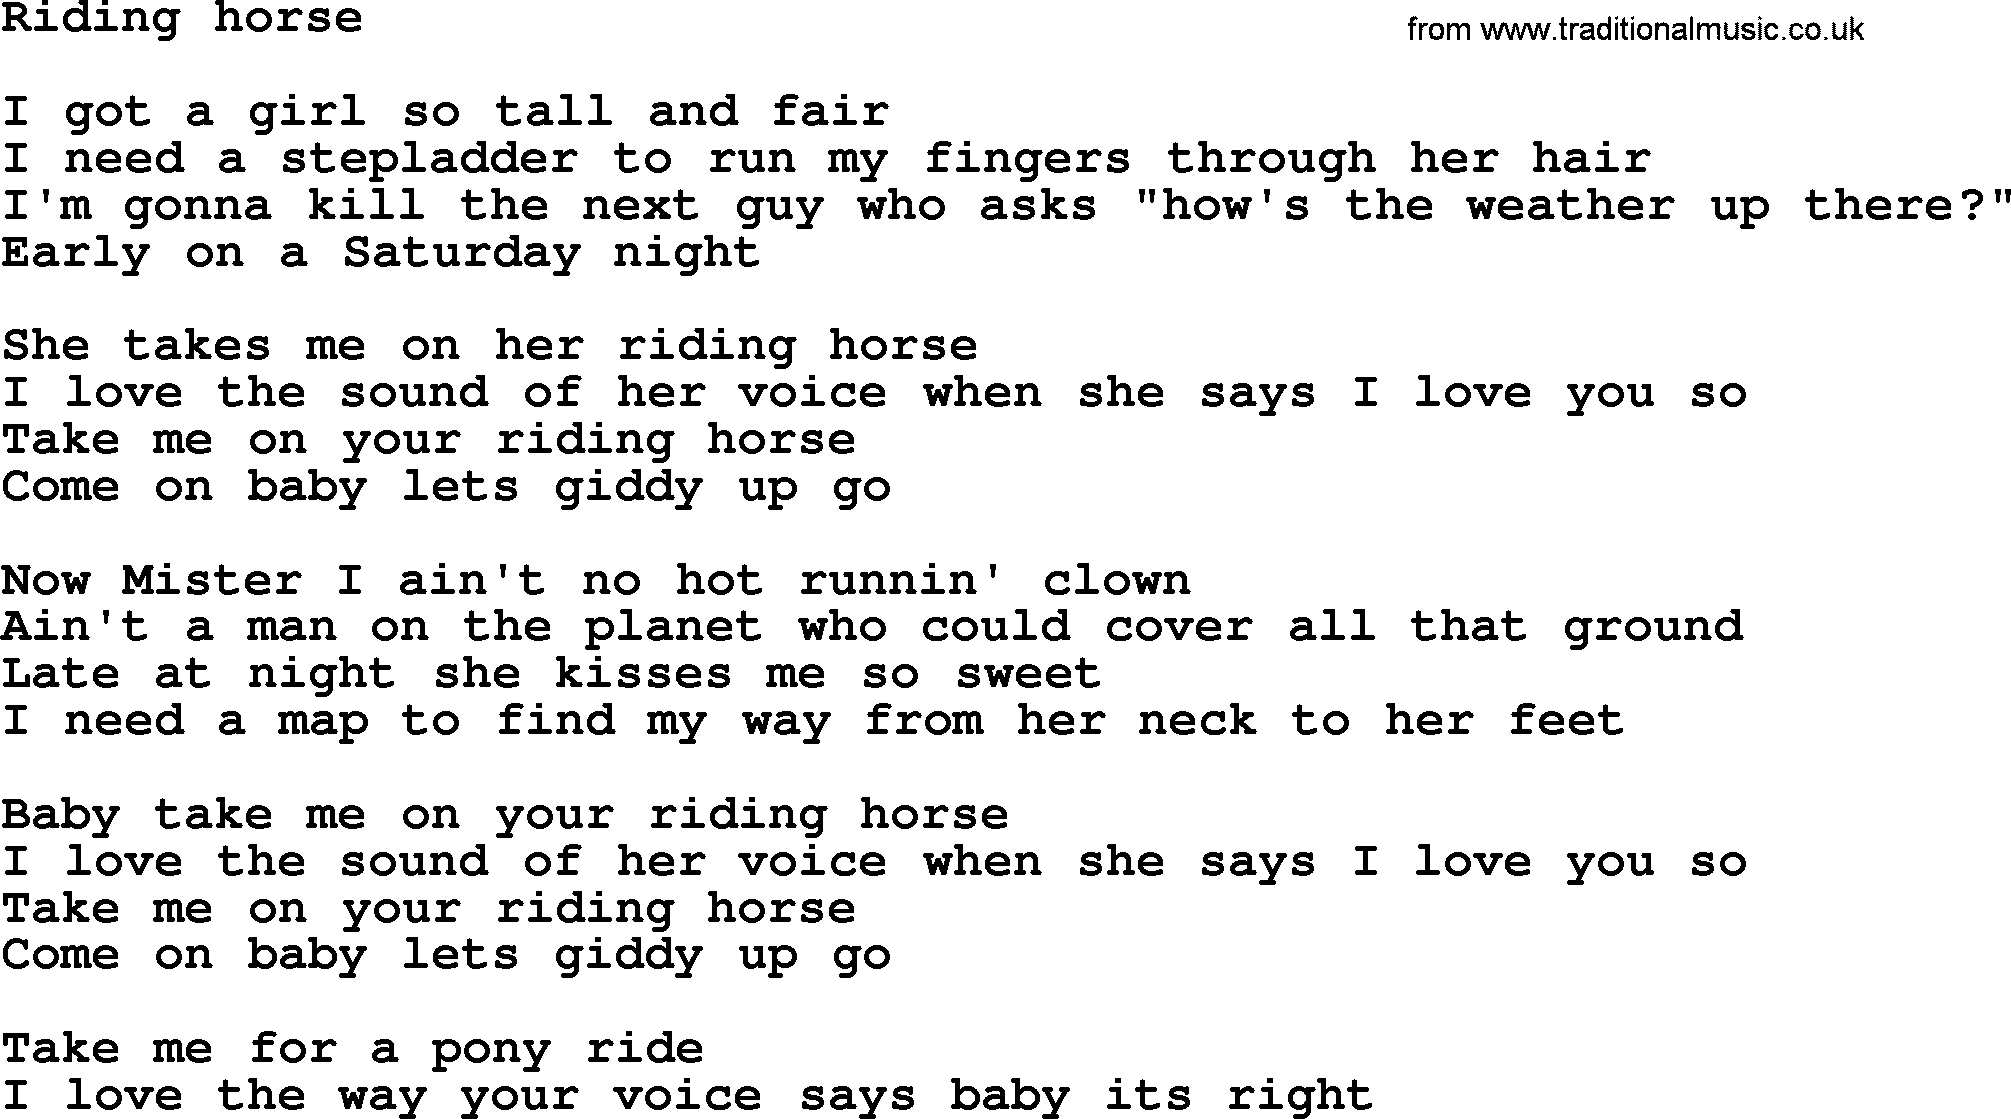 Bruce Springsteen song: Riding Horse lyrics